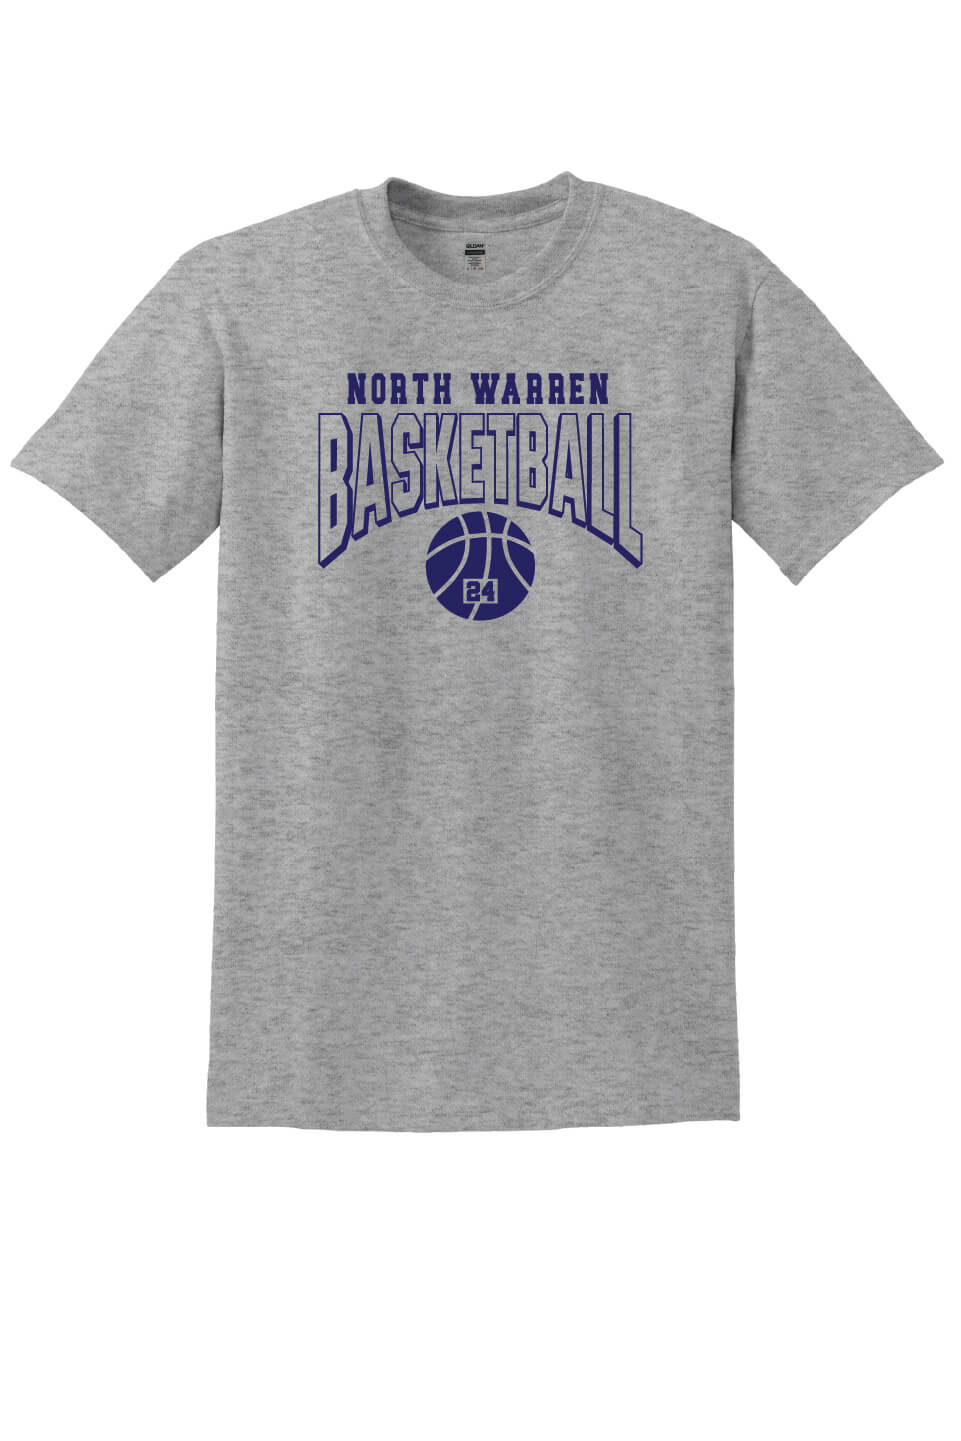 Basketball Short Sleeve T-Shirt (Youth) gray